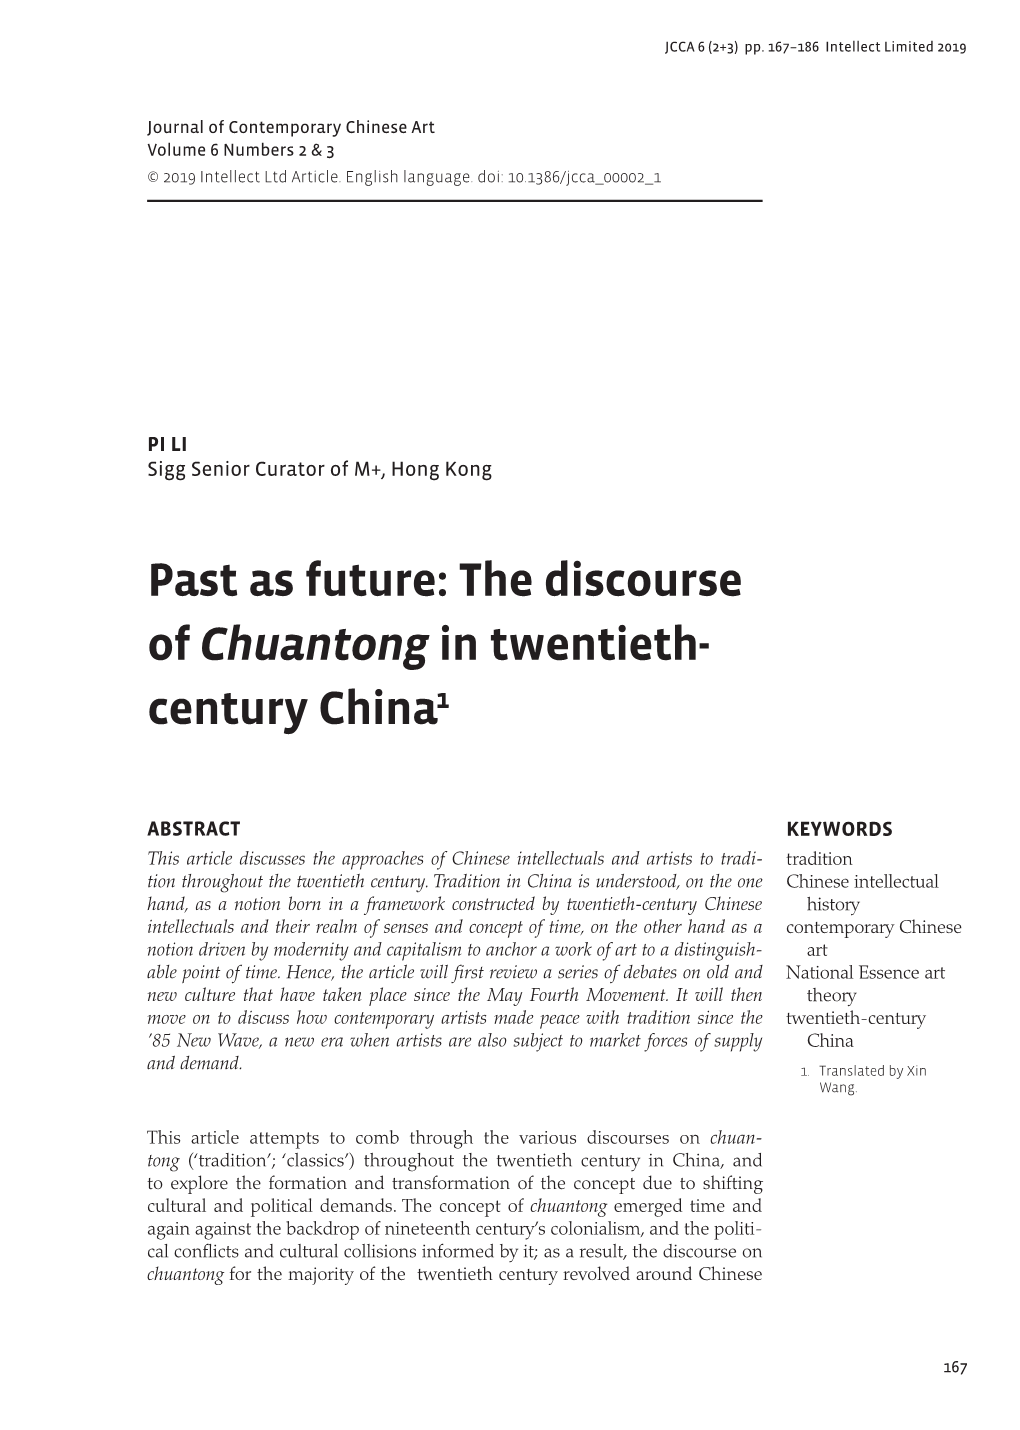 Past As Future: the Discourse of Chuantongin Twentieth